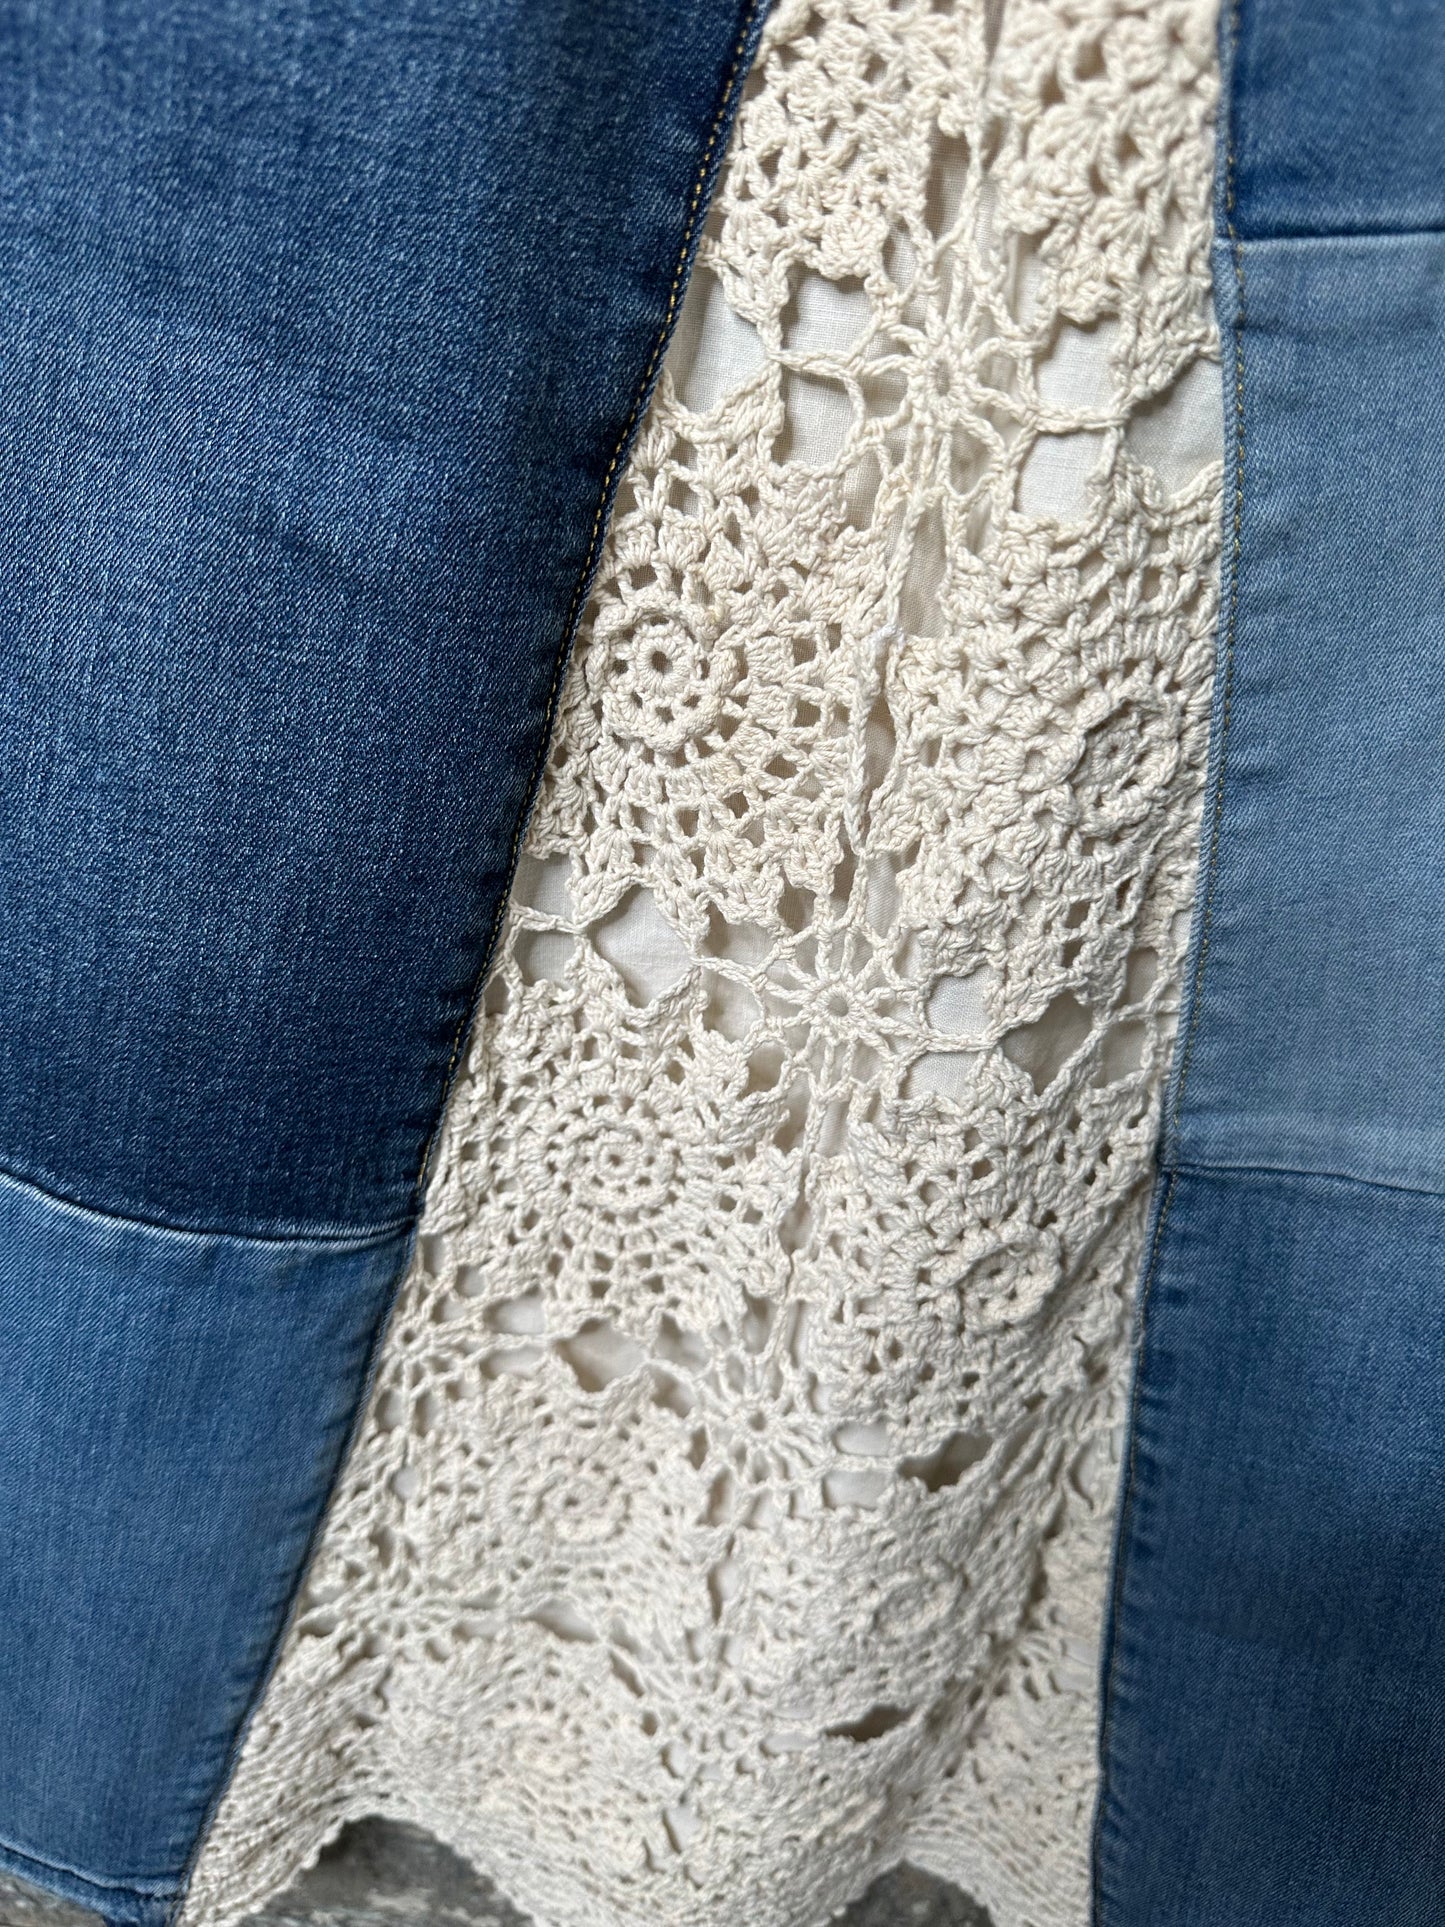 patched blue denim + lace maxi skirt, (size 29)